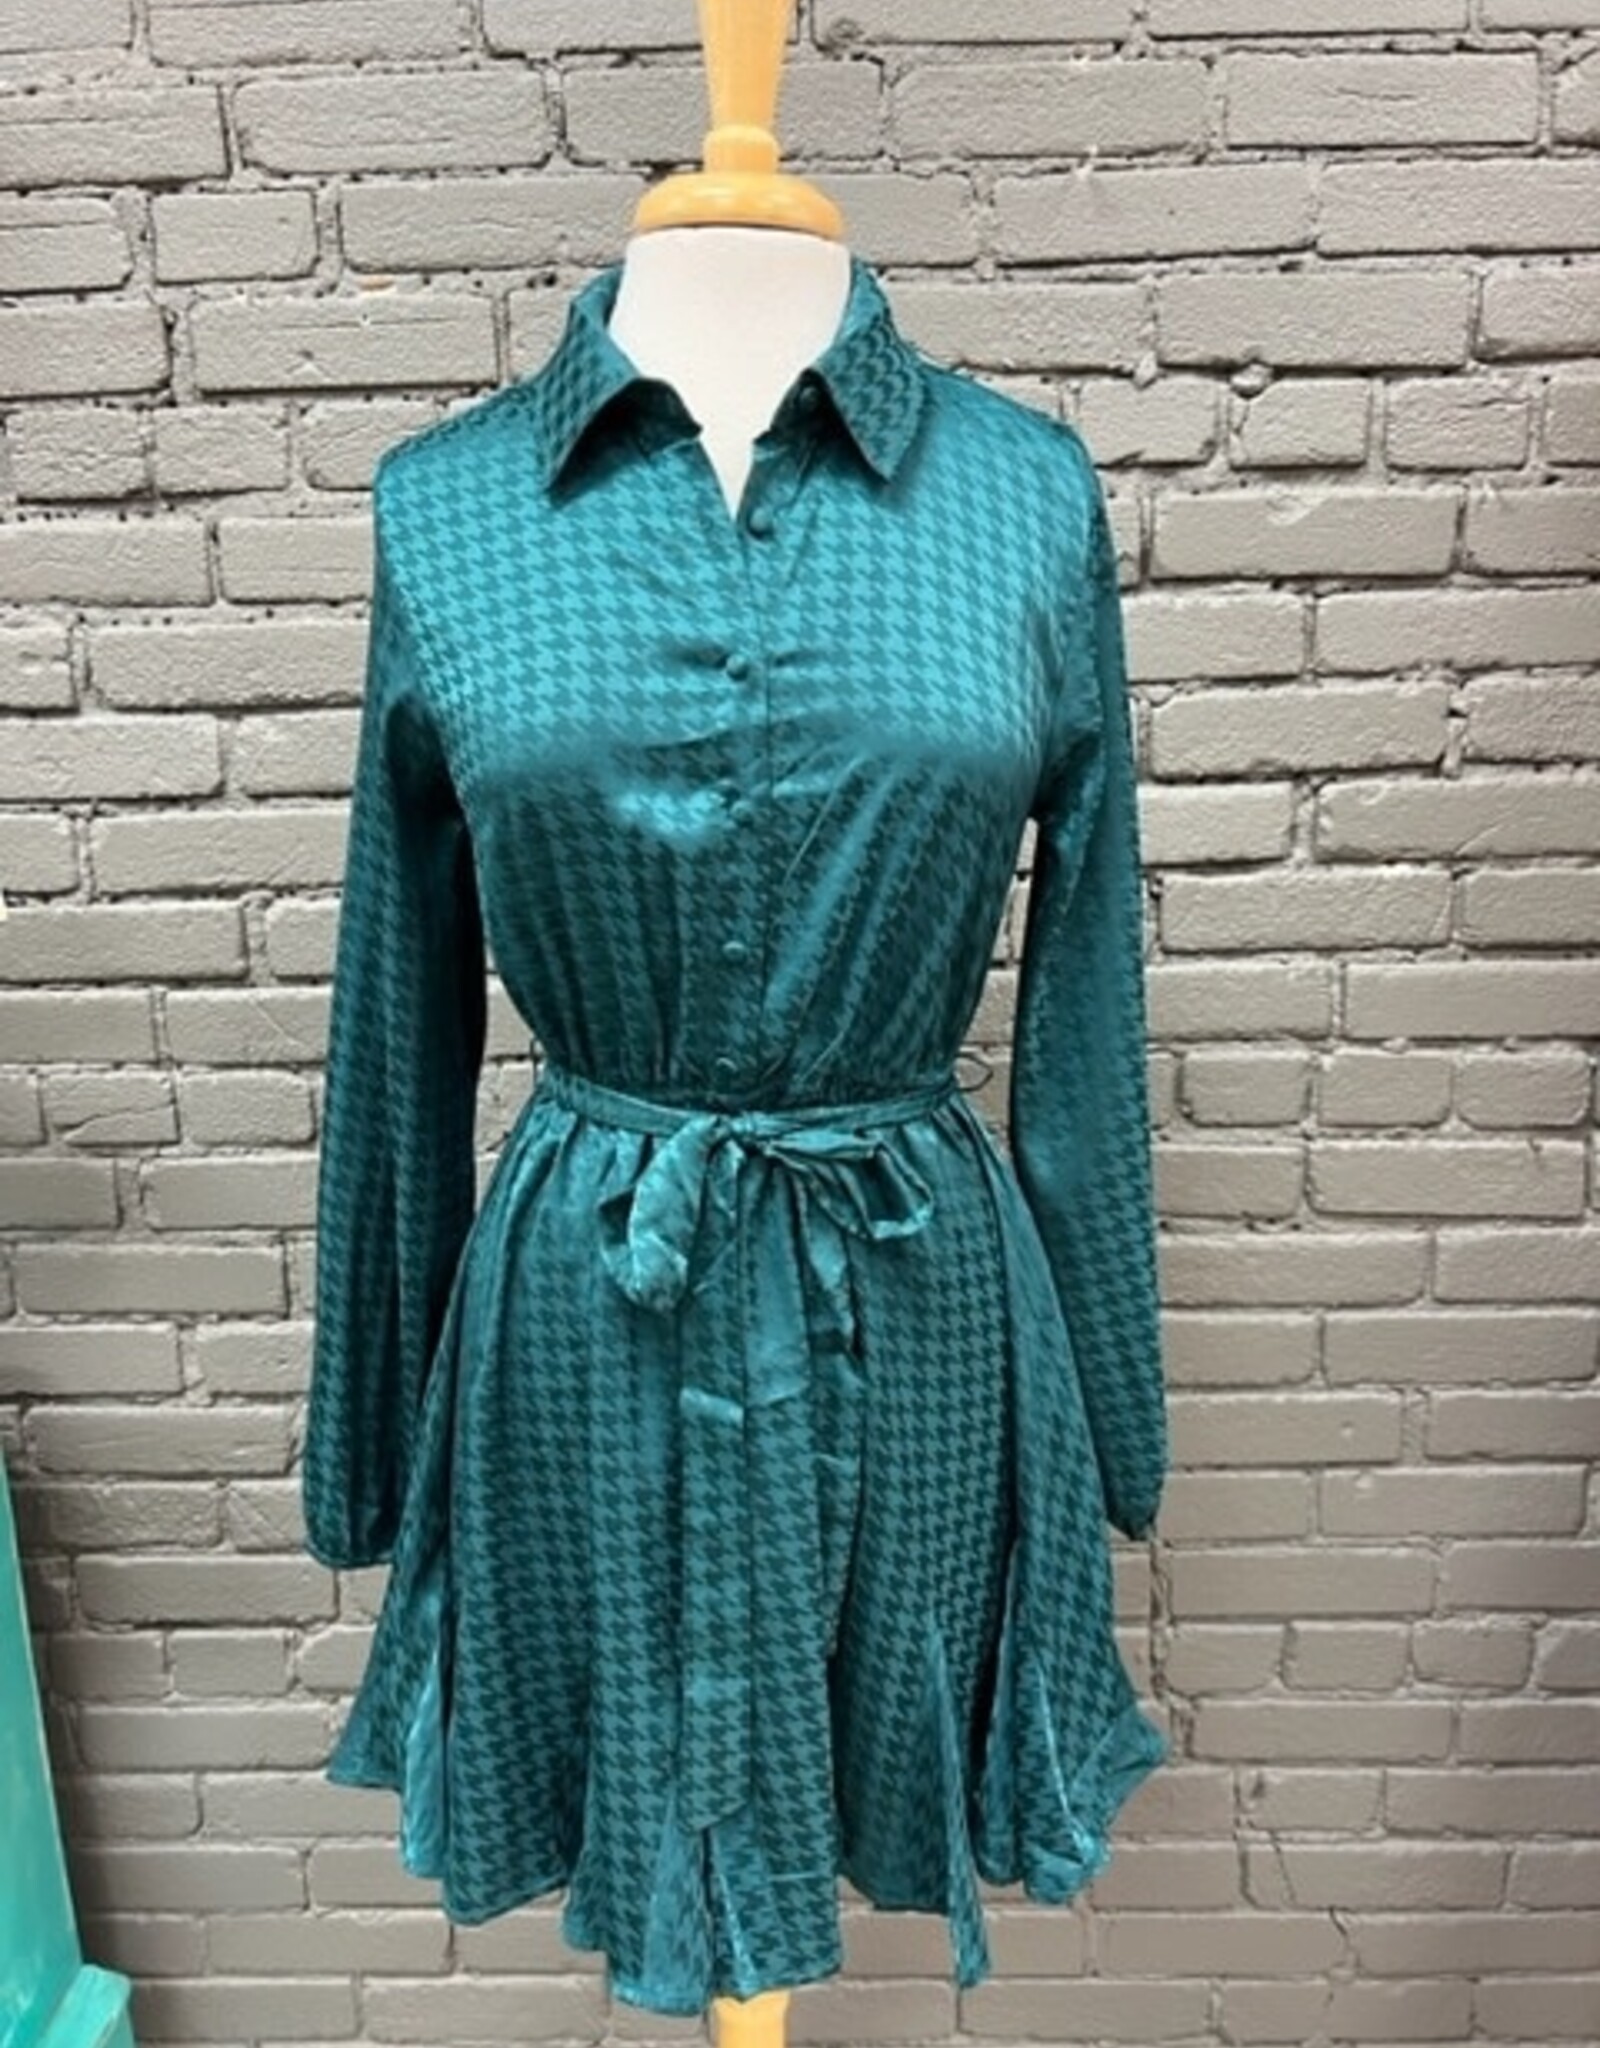 Dress Charlotte Green Button Print Dress